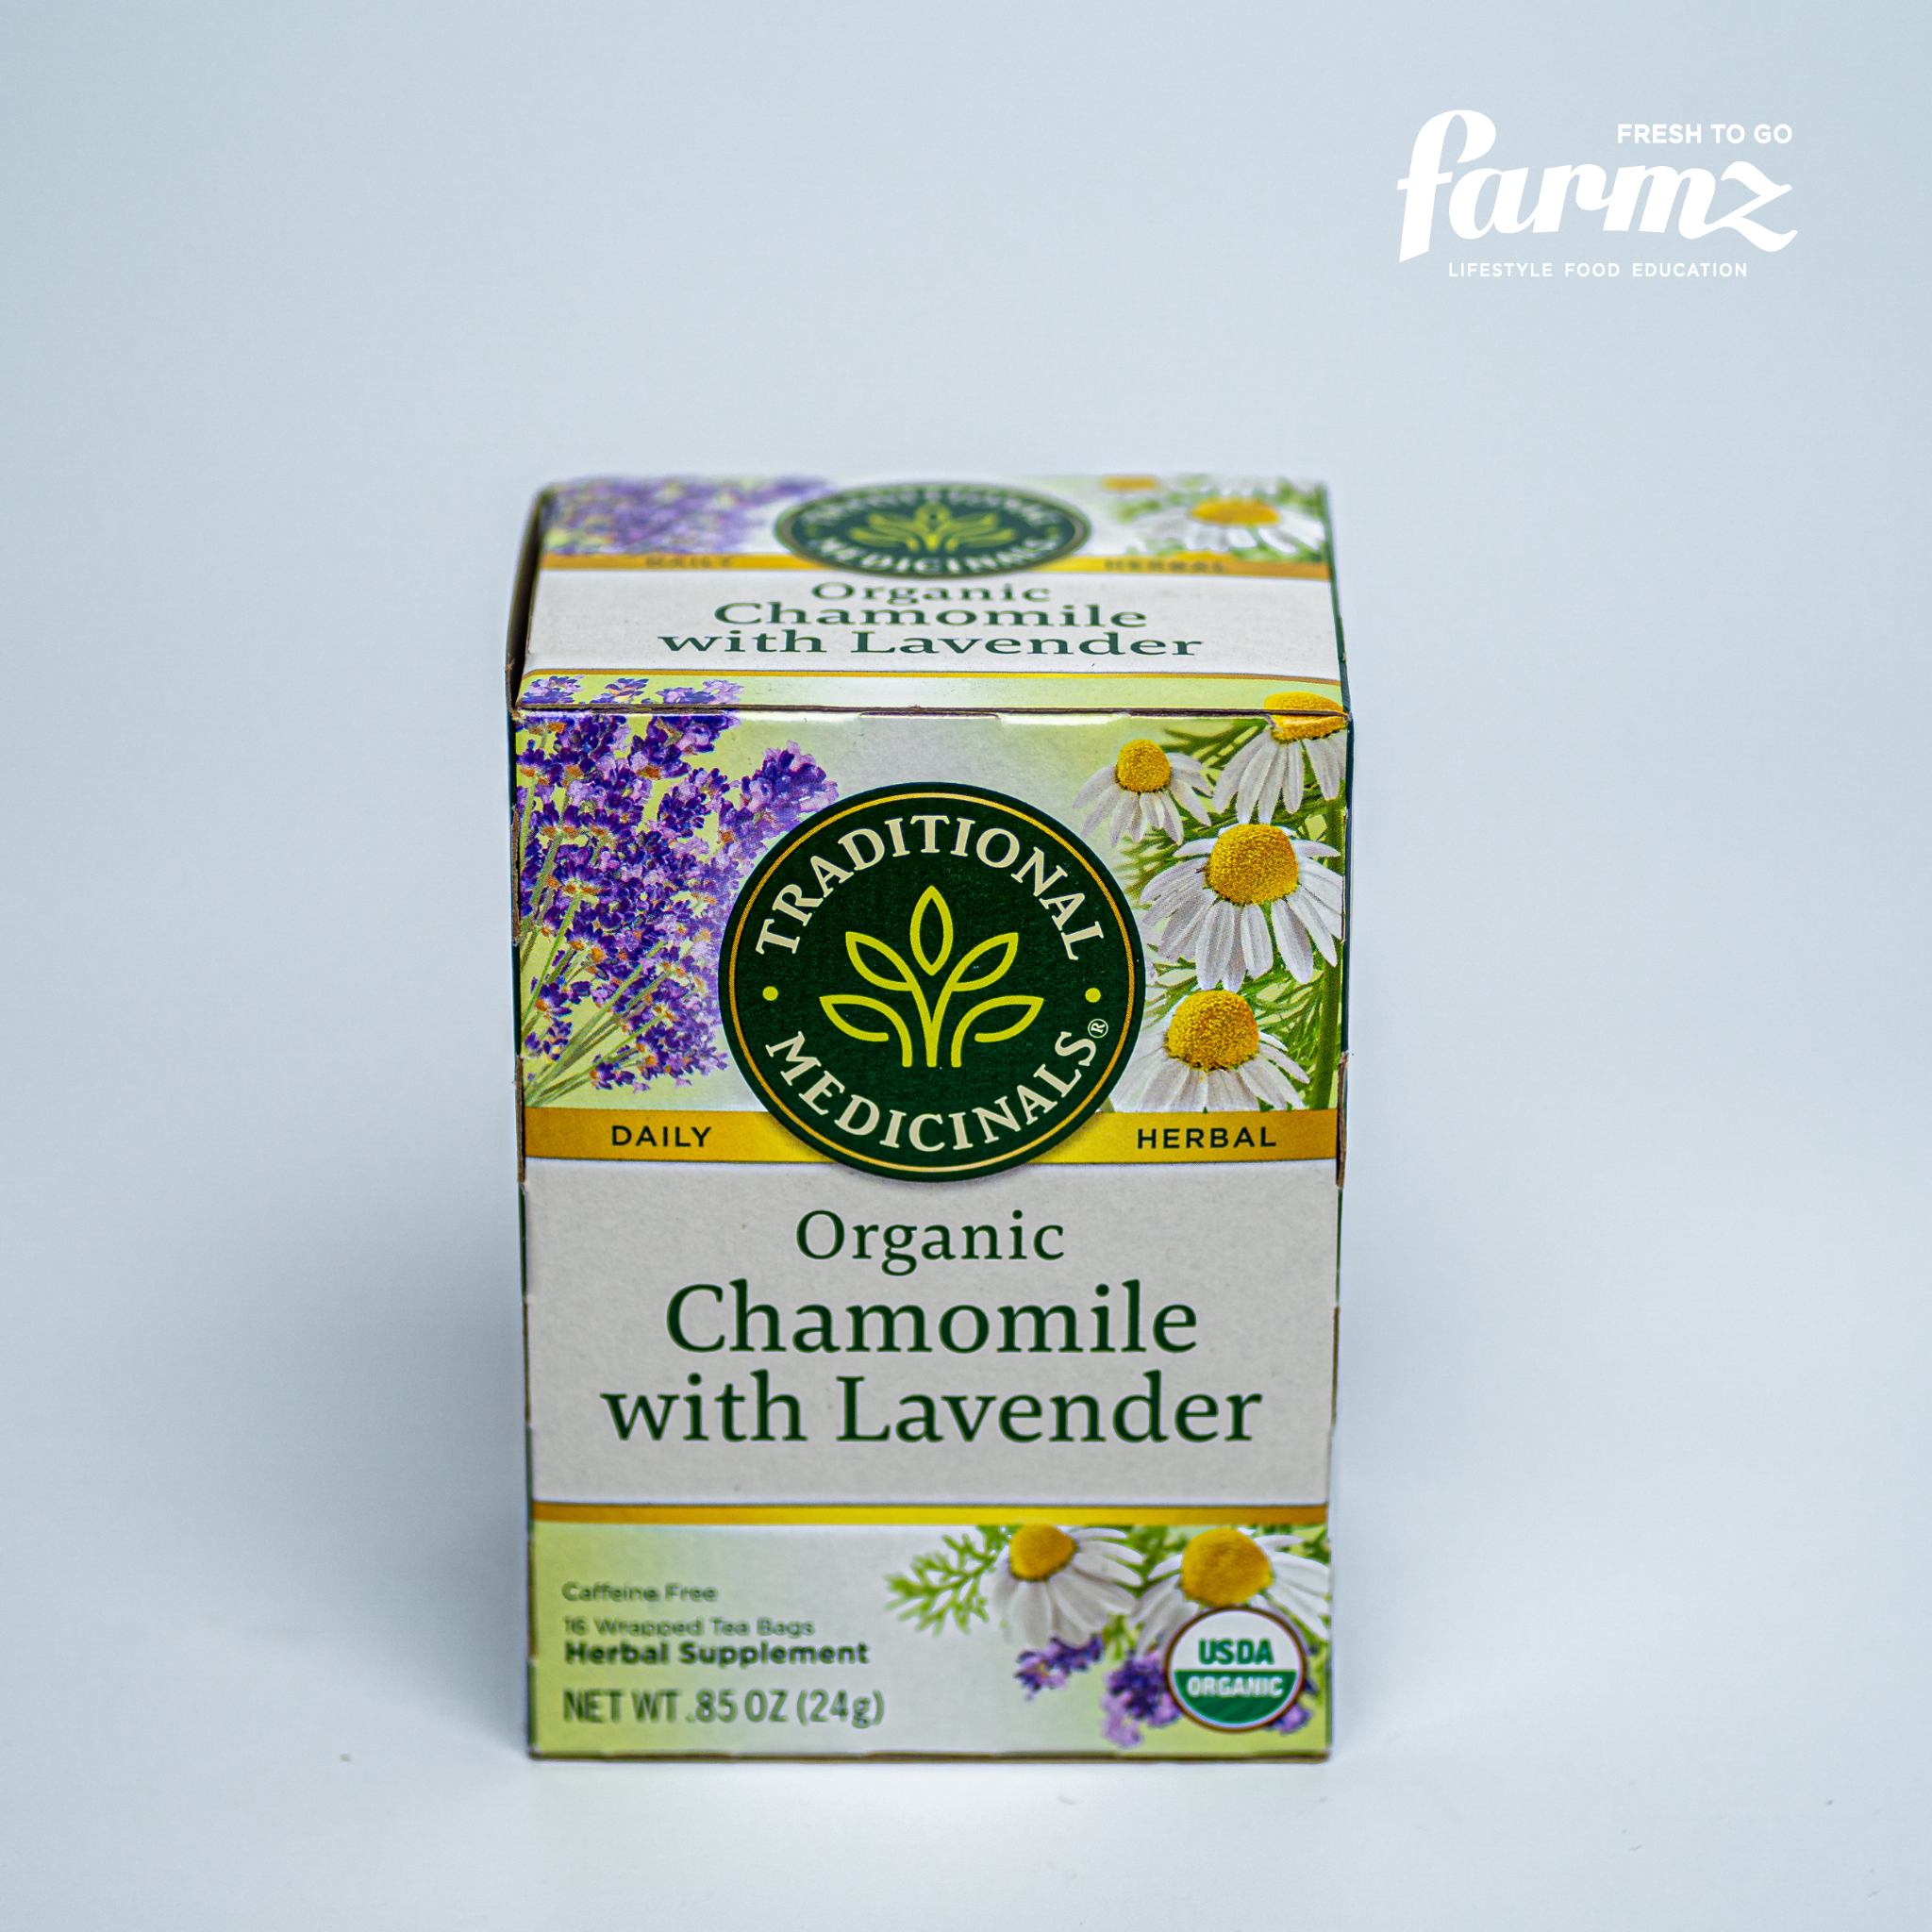 Organic Chamomile with Lavender Tea